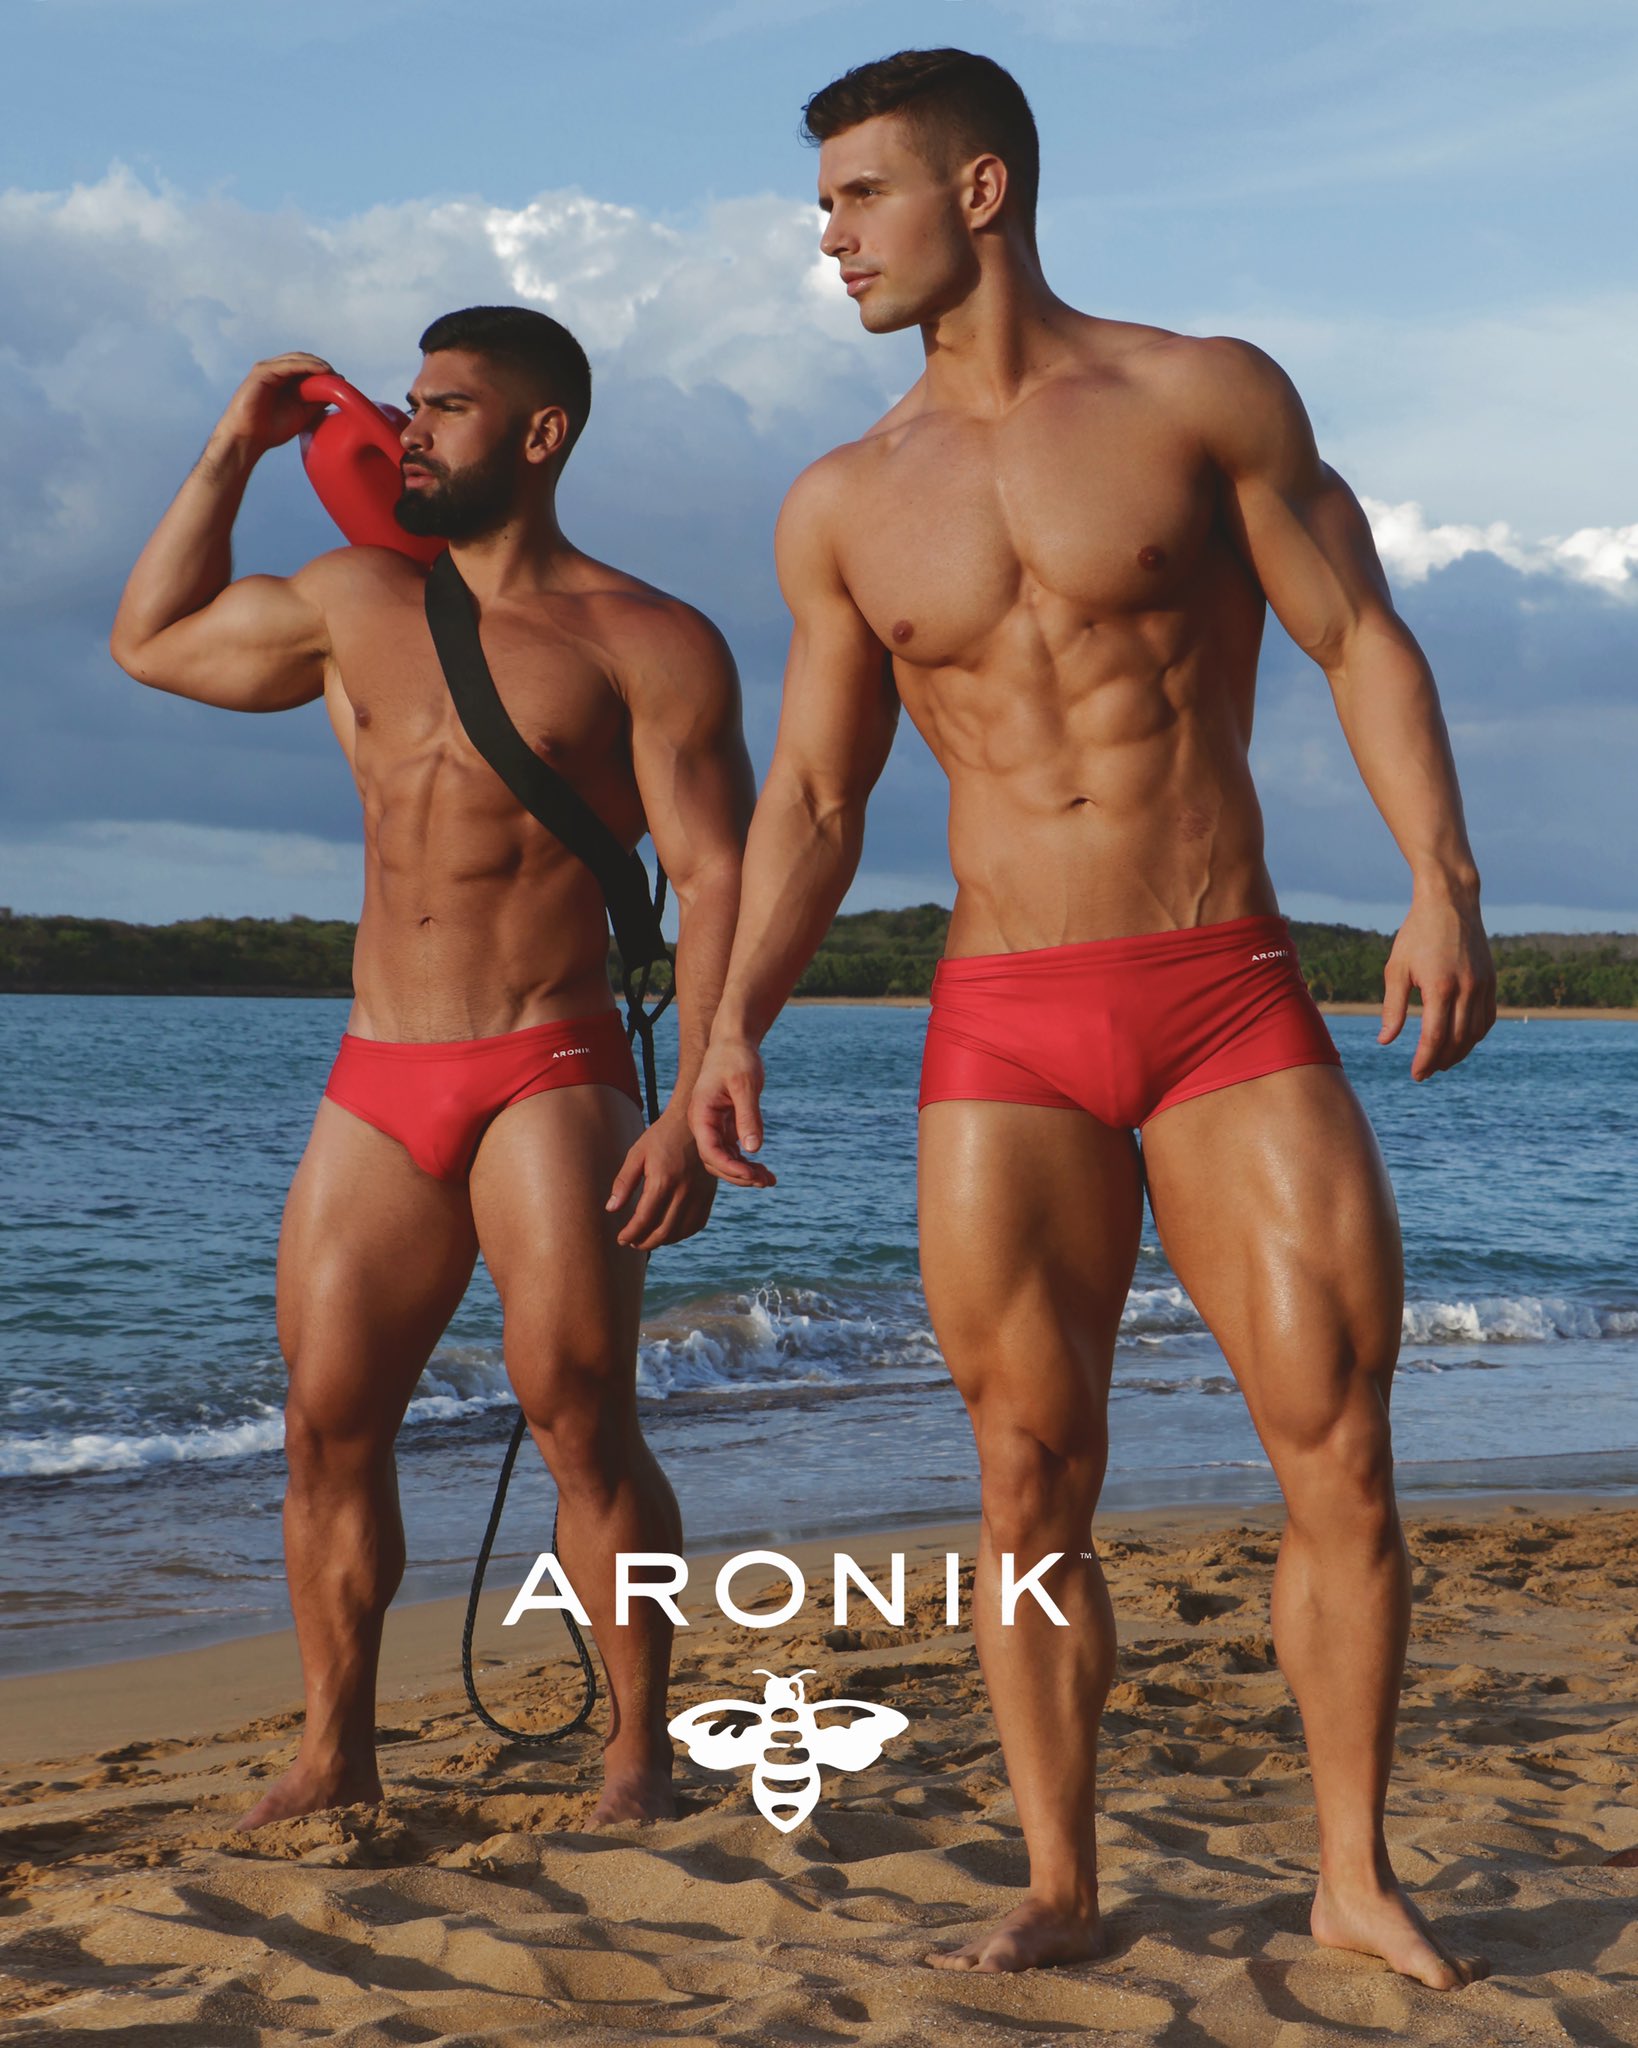 Aronik underwear review